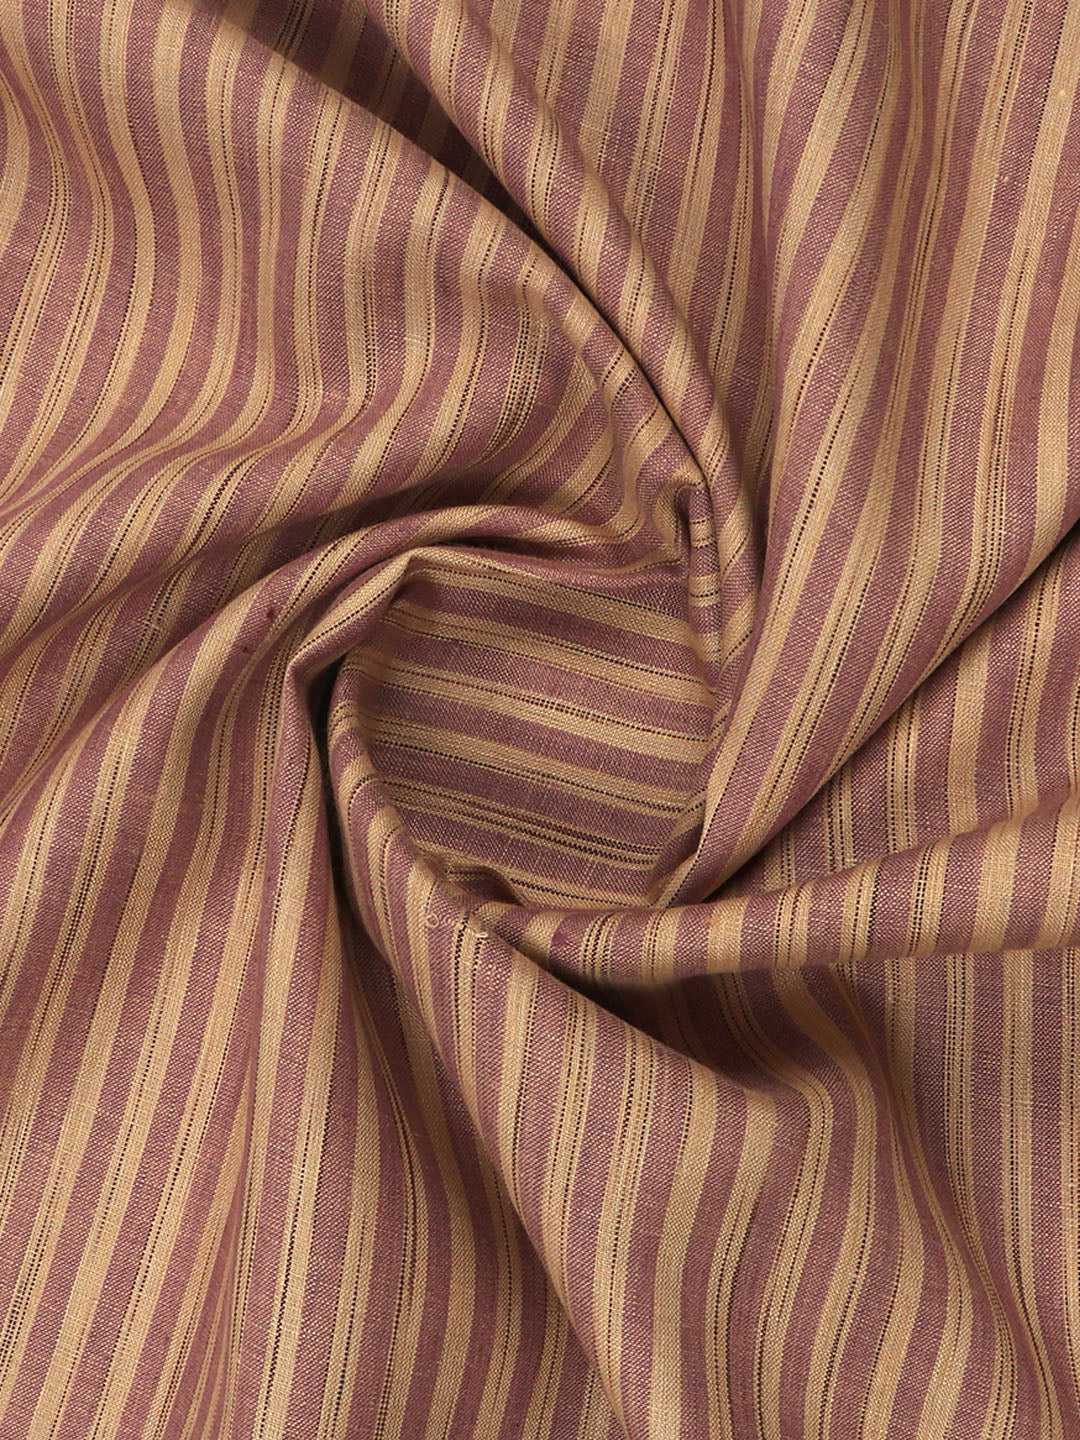 Pure Linen Brown Colour Striped Shirt Fabric- Linen Park Texena